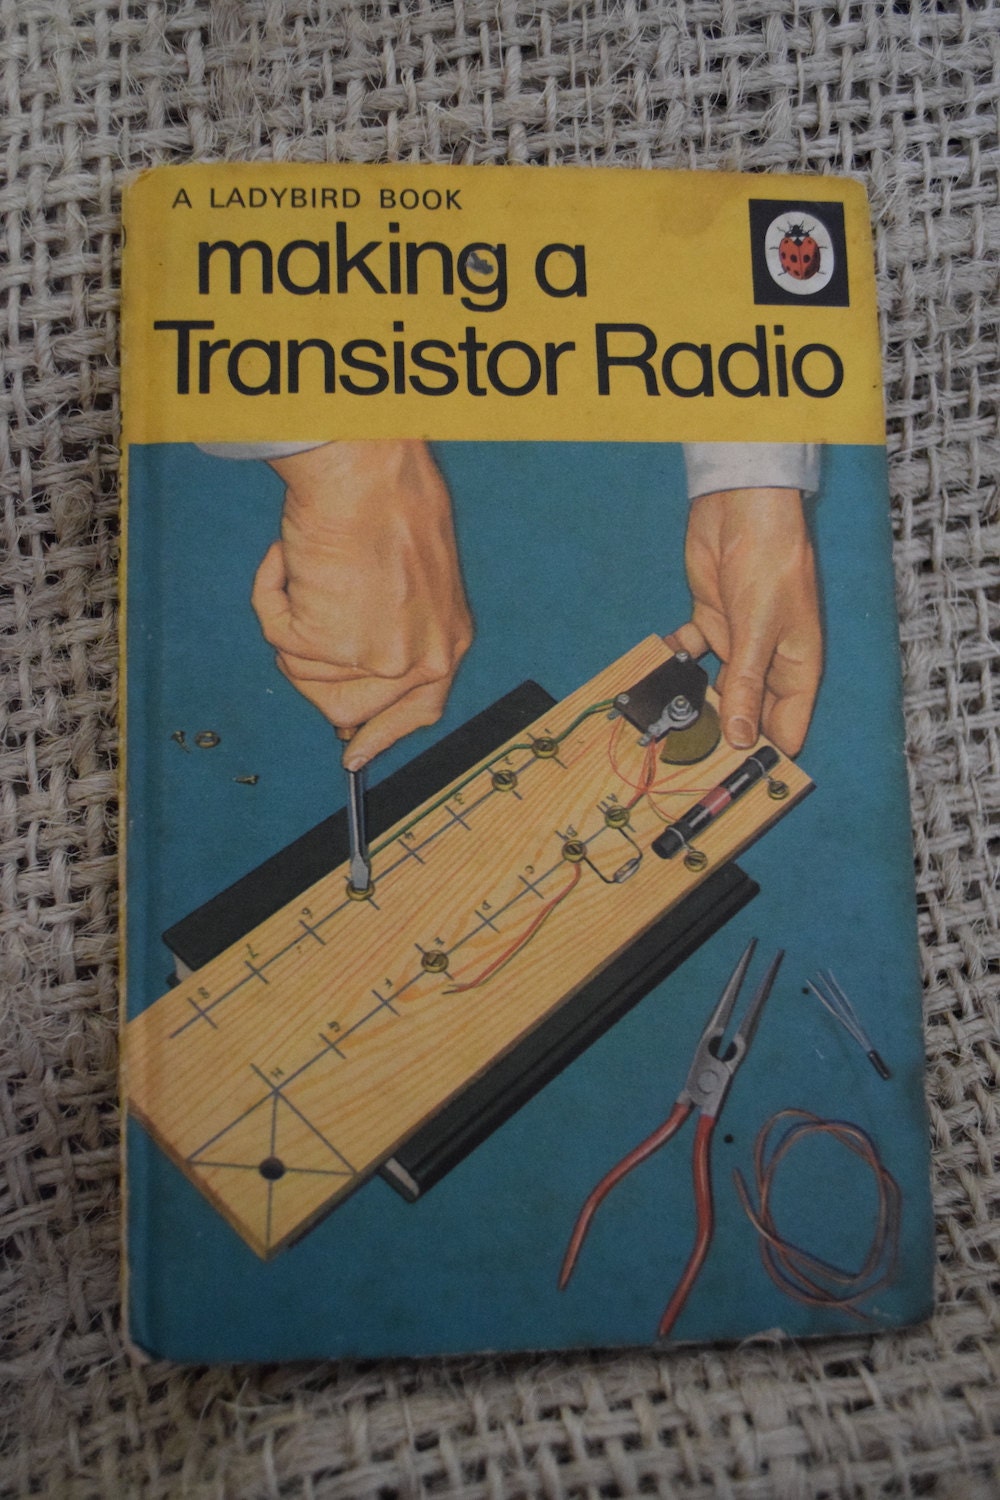 ladybird book how to build a transistor radio